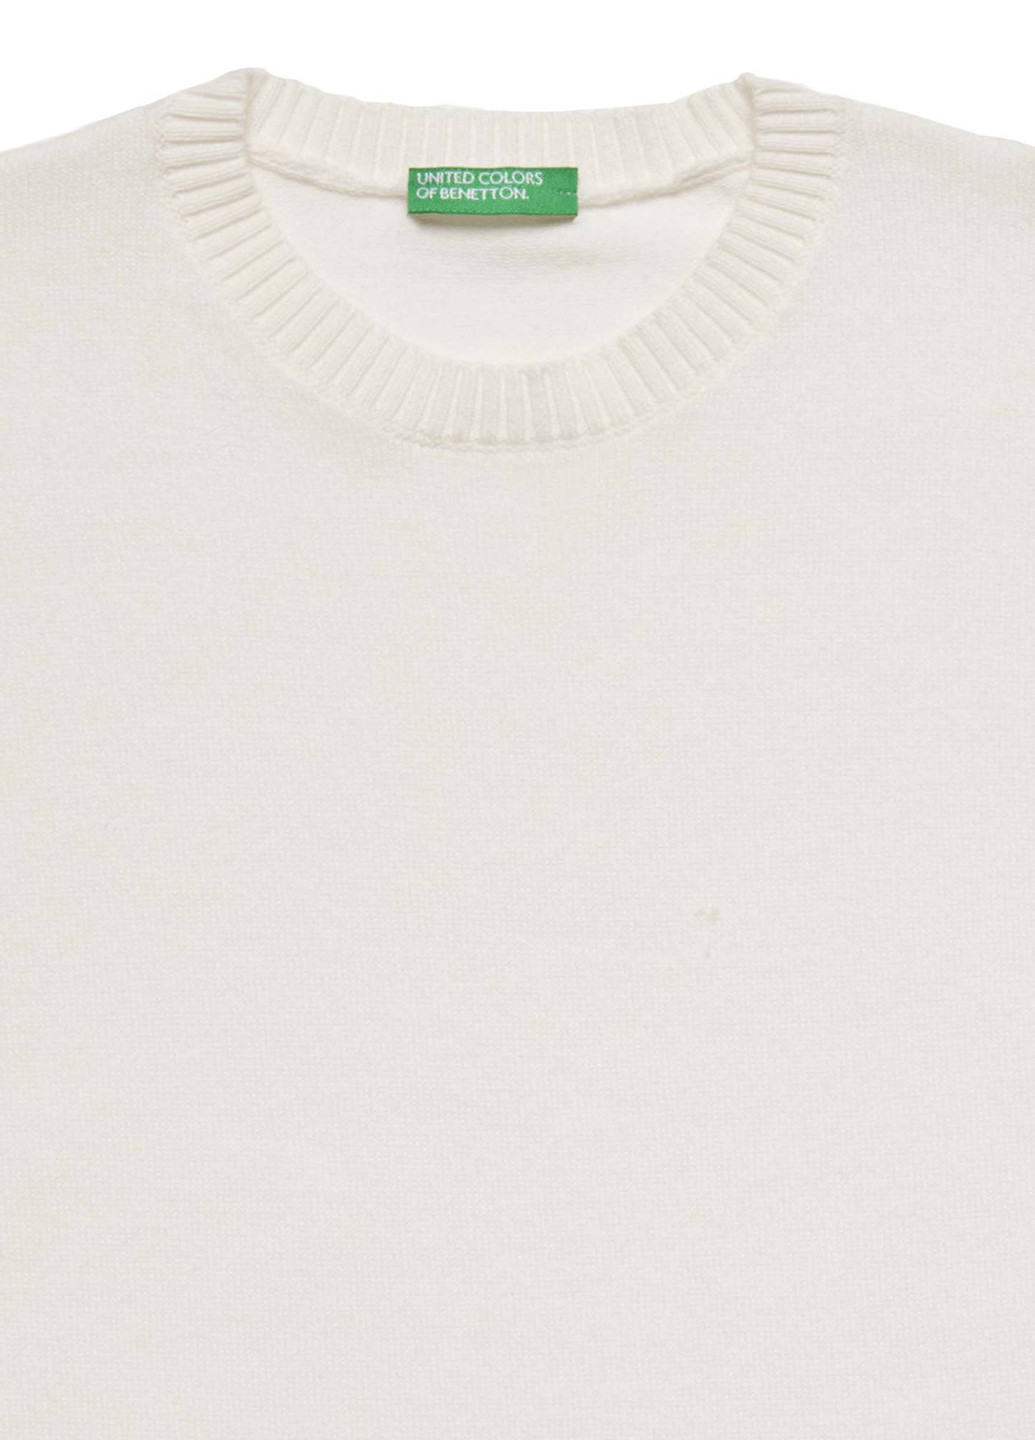 Белый демисезонный джемпер джемпер United Colors of Benetton